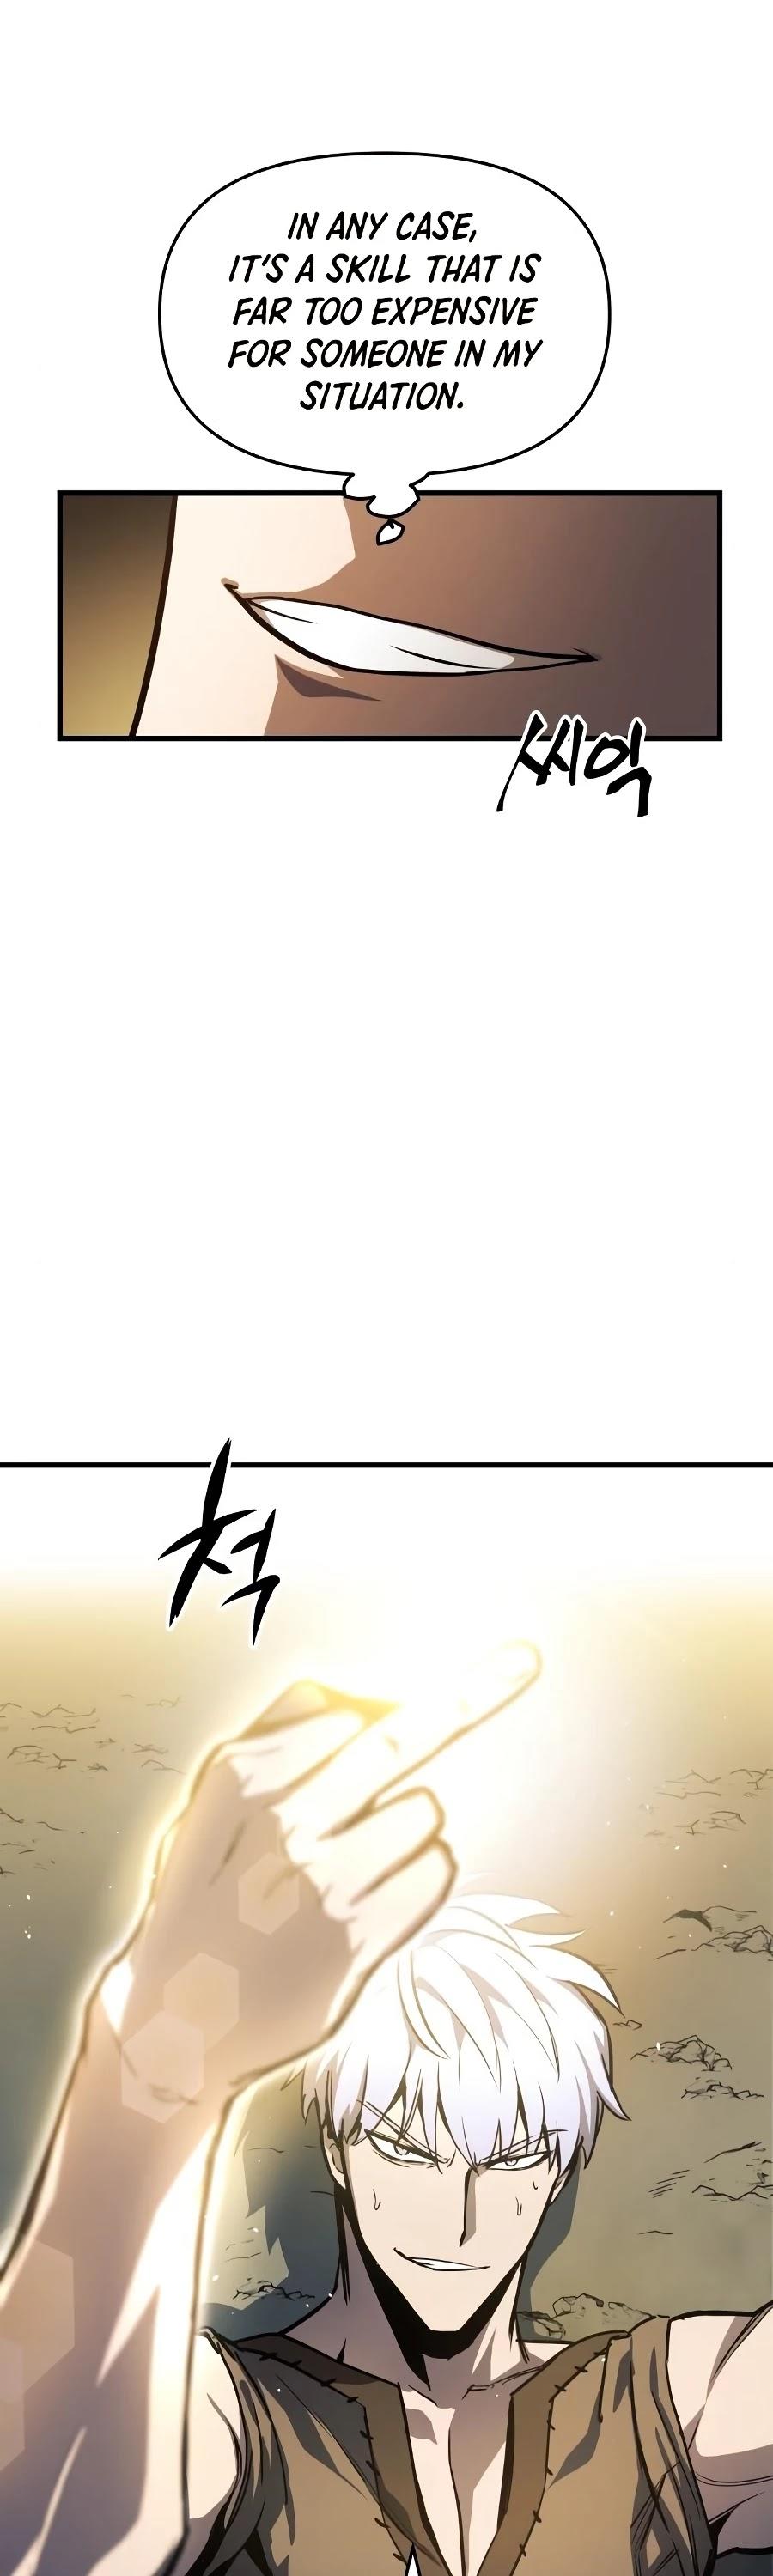 Reincarnation Of The Suicidal Battle God Chapter 7 page 30 - Mangakakalot